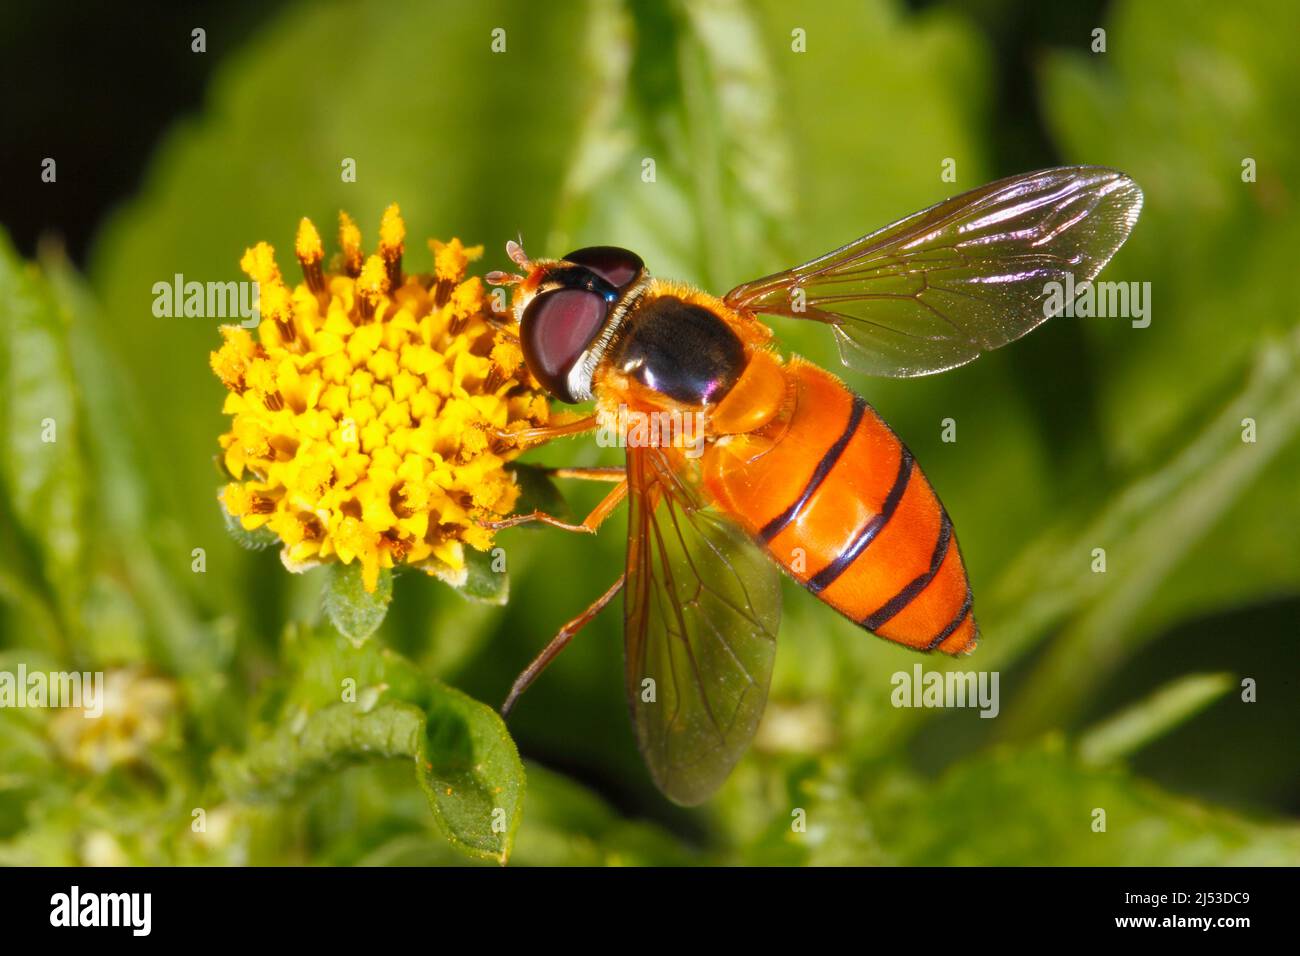 Orange Striped Hoverfly, Asarkina ericetorum. Feeding on yellow flower. Coffs Harbour, NSW, Australia Stock Photo